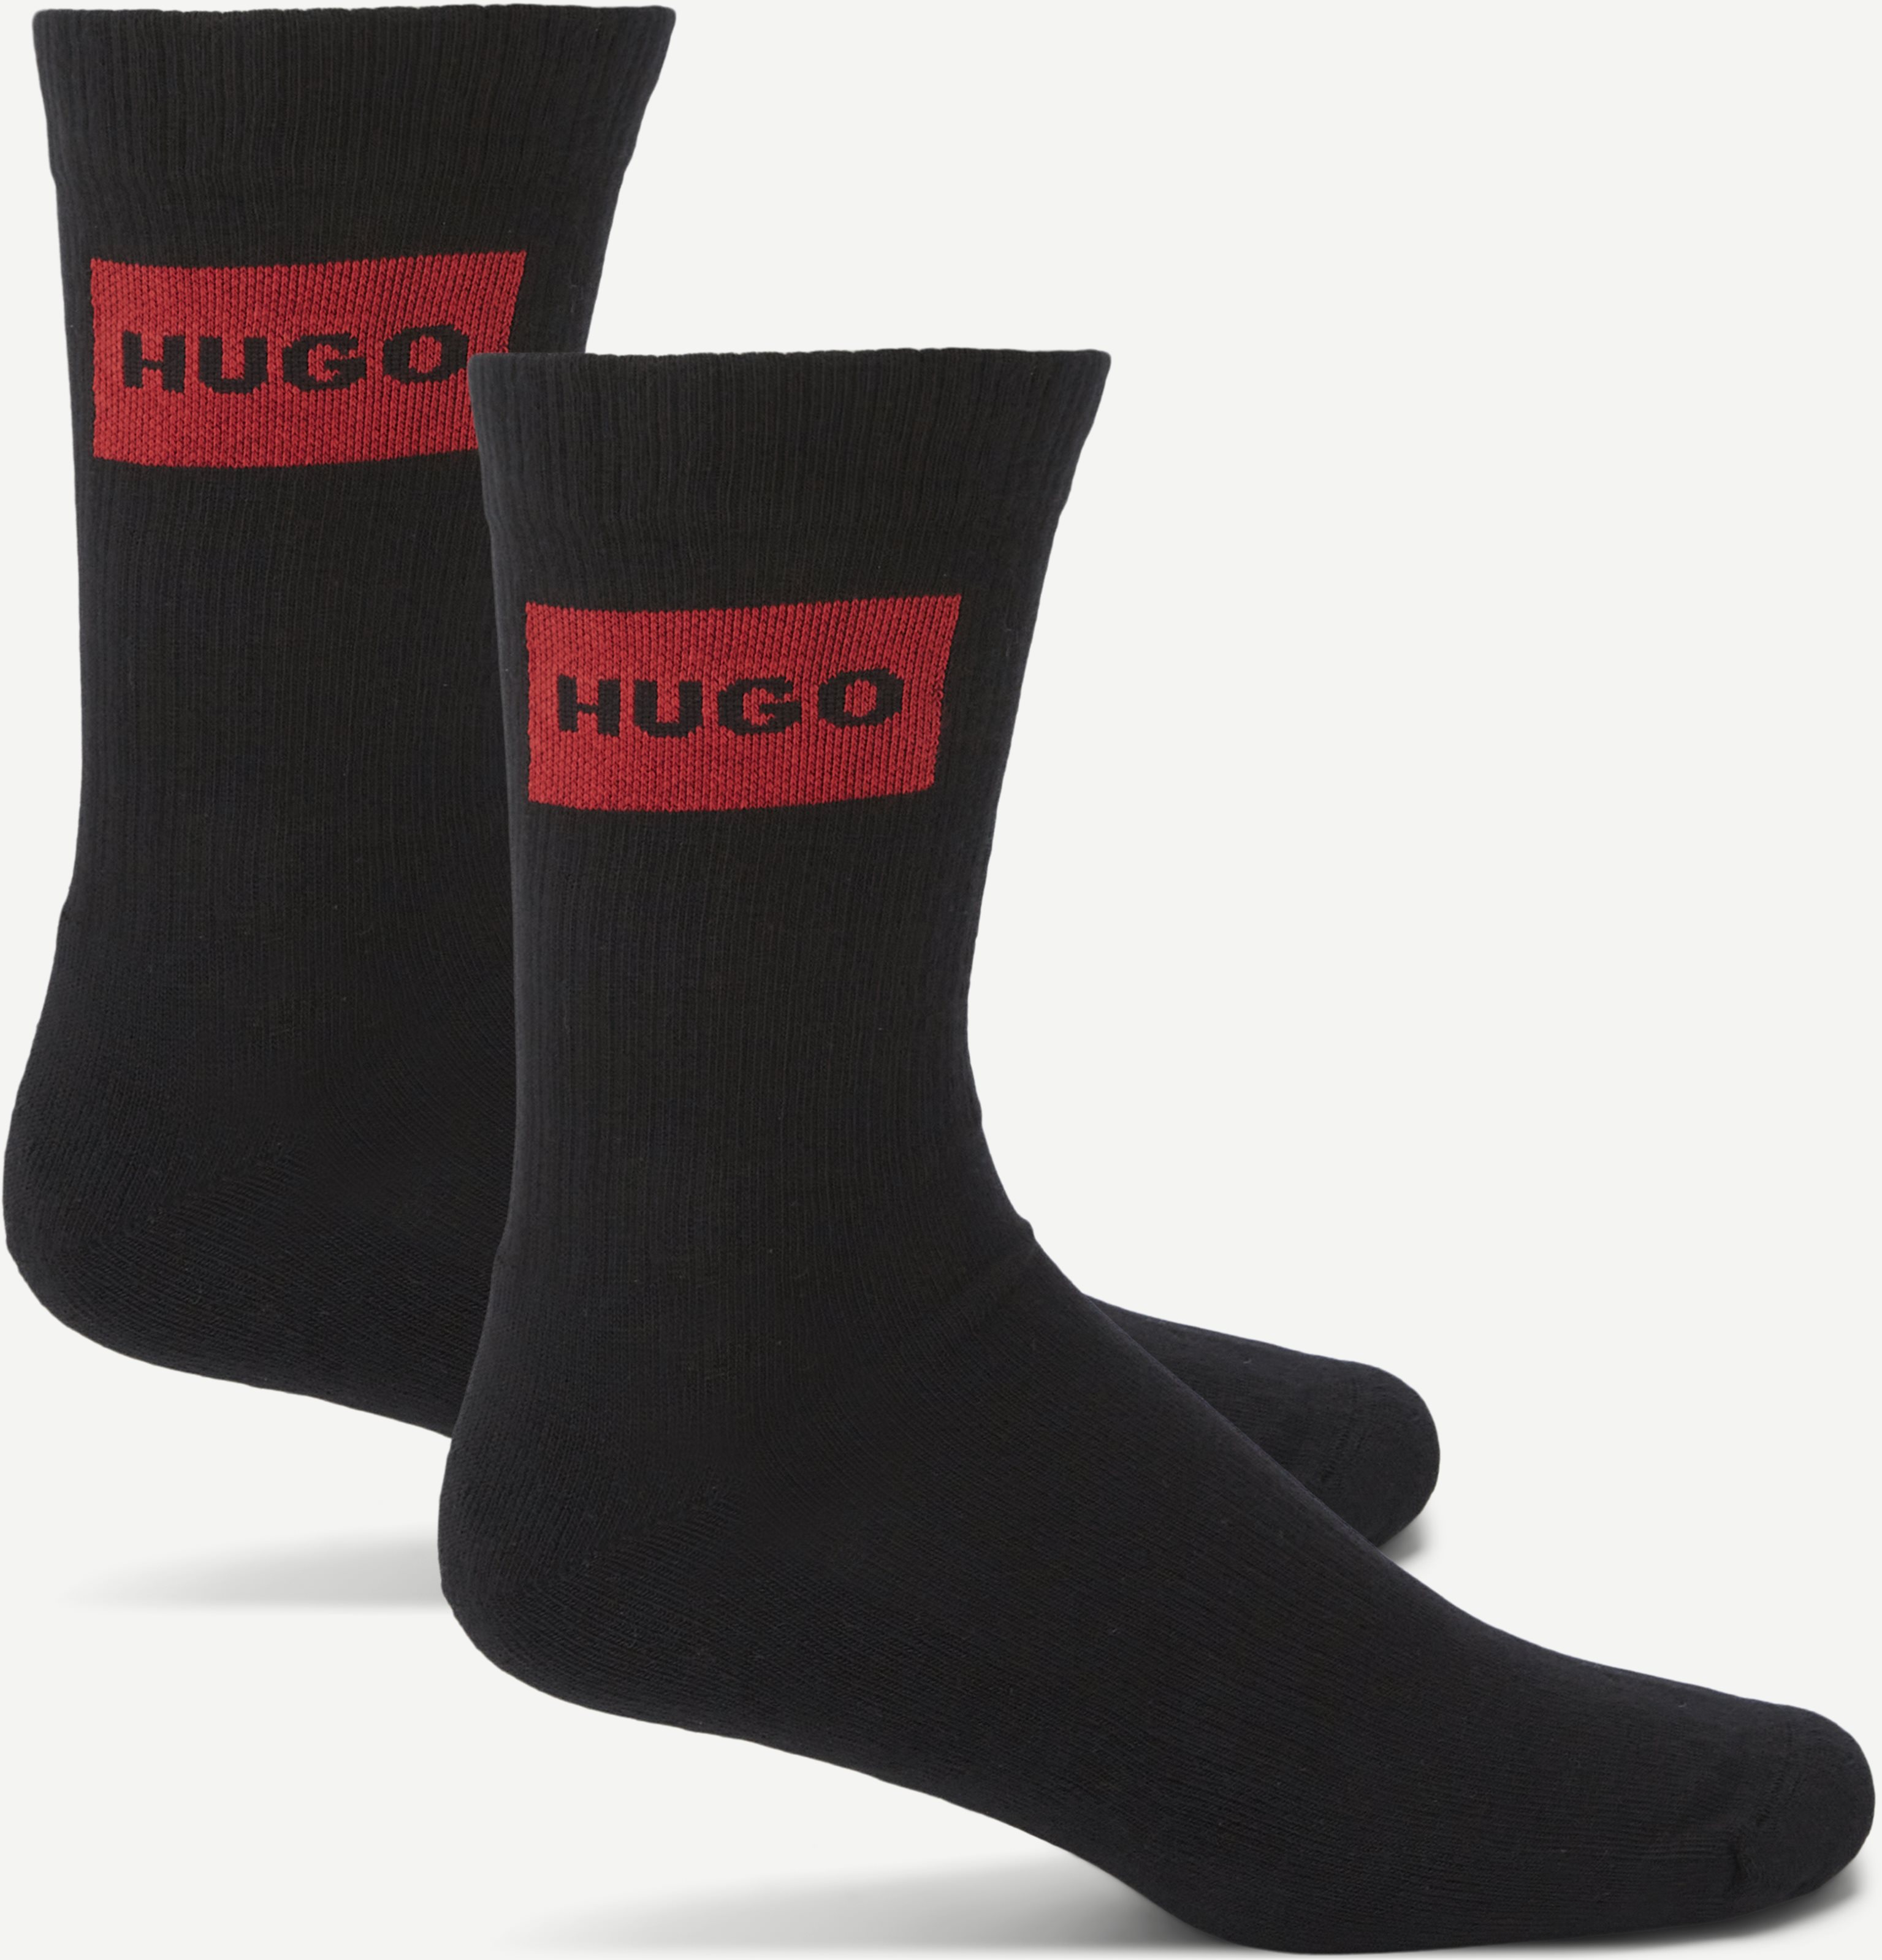 HUGO Socks 50510640 2P QS RIB LABEL Black